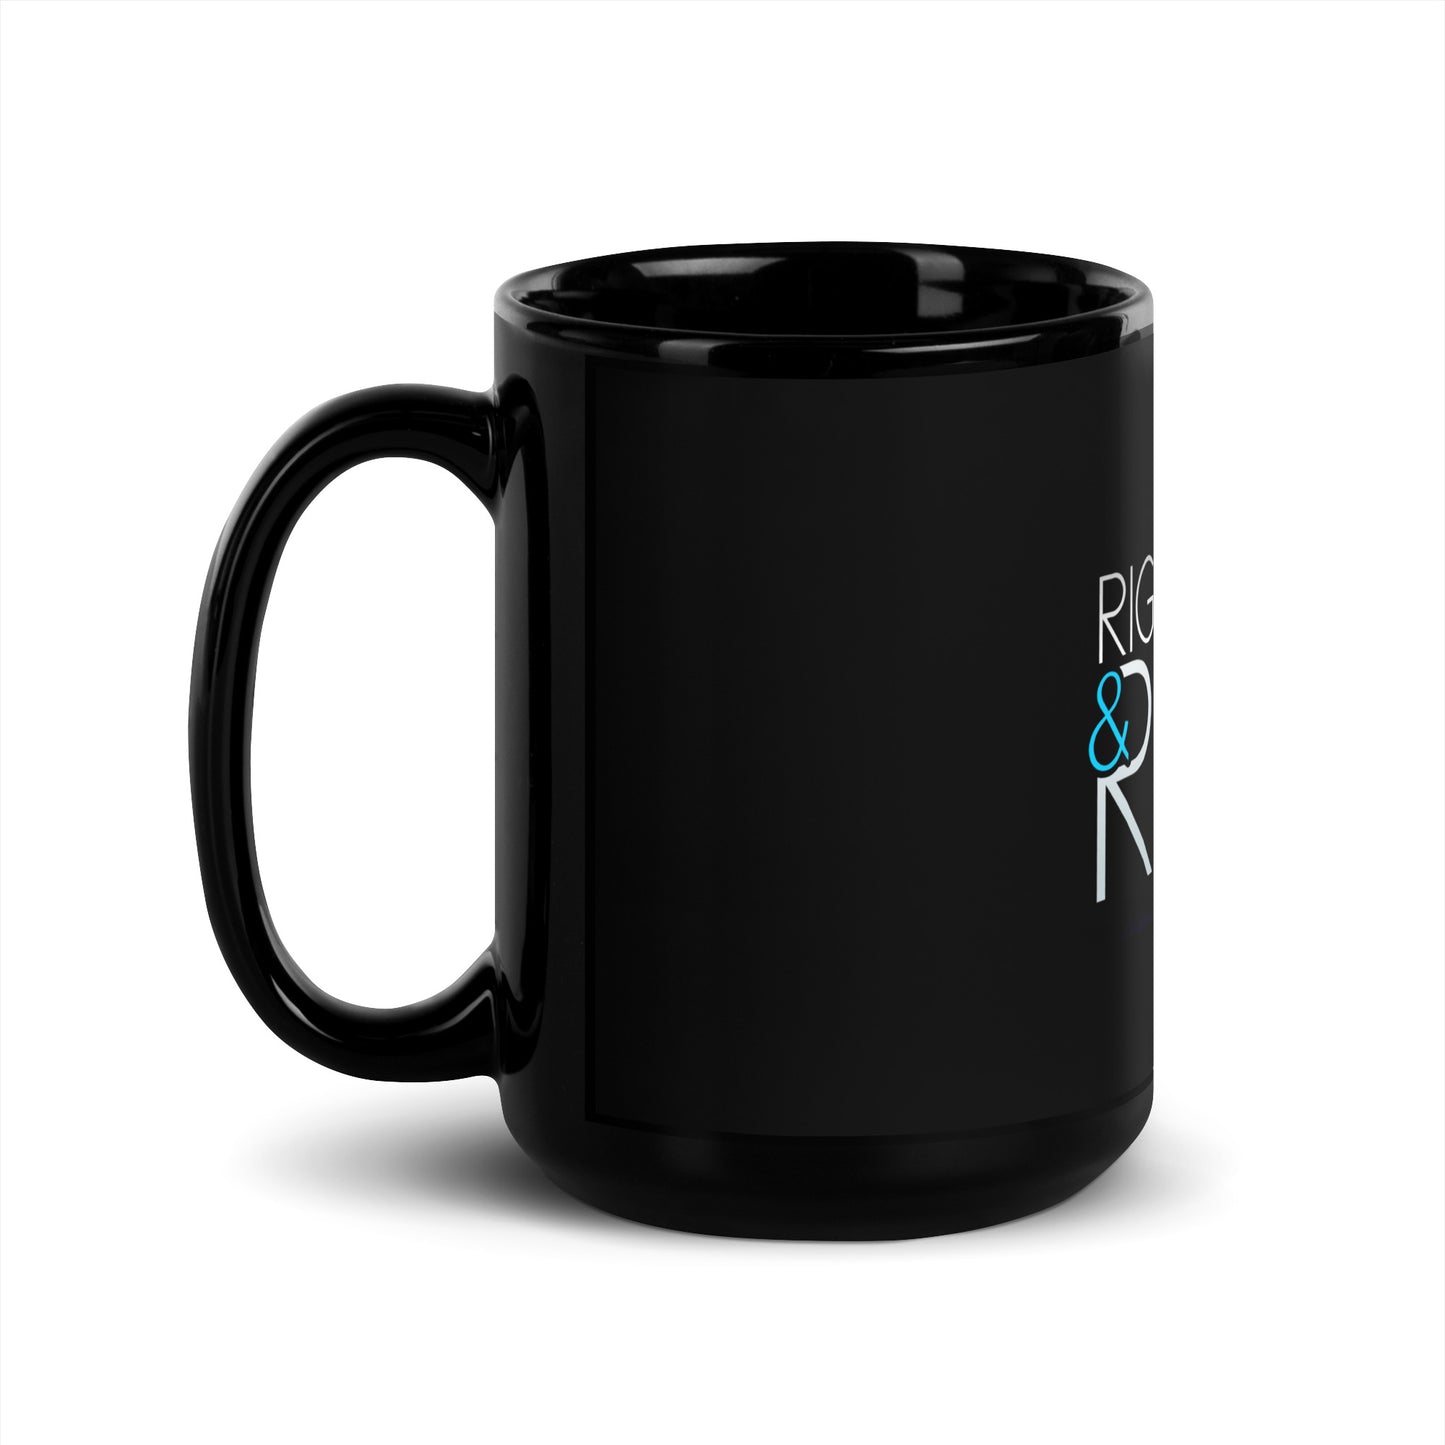 Righteous & Rich Black Coffee Mug